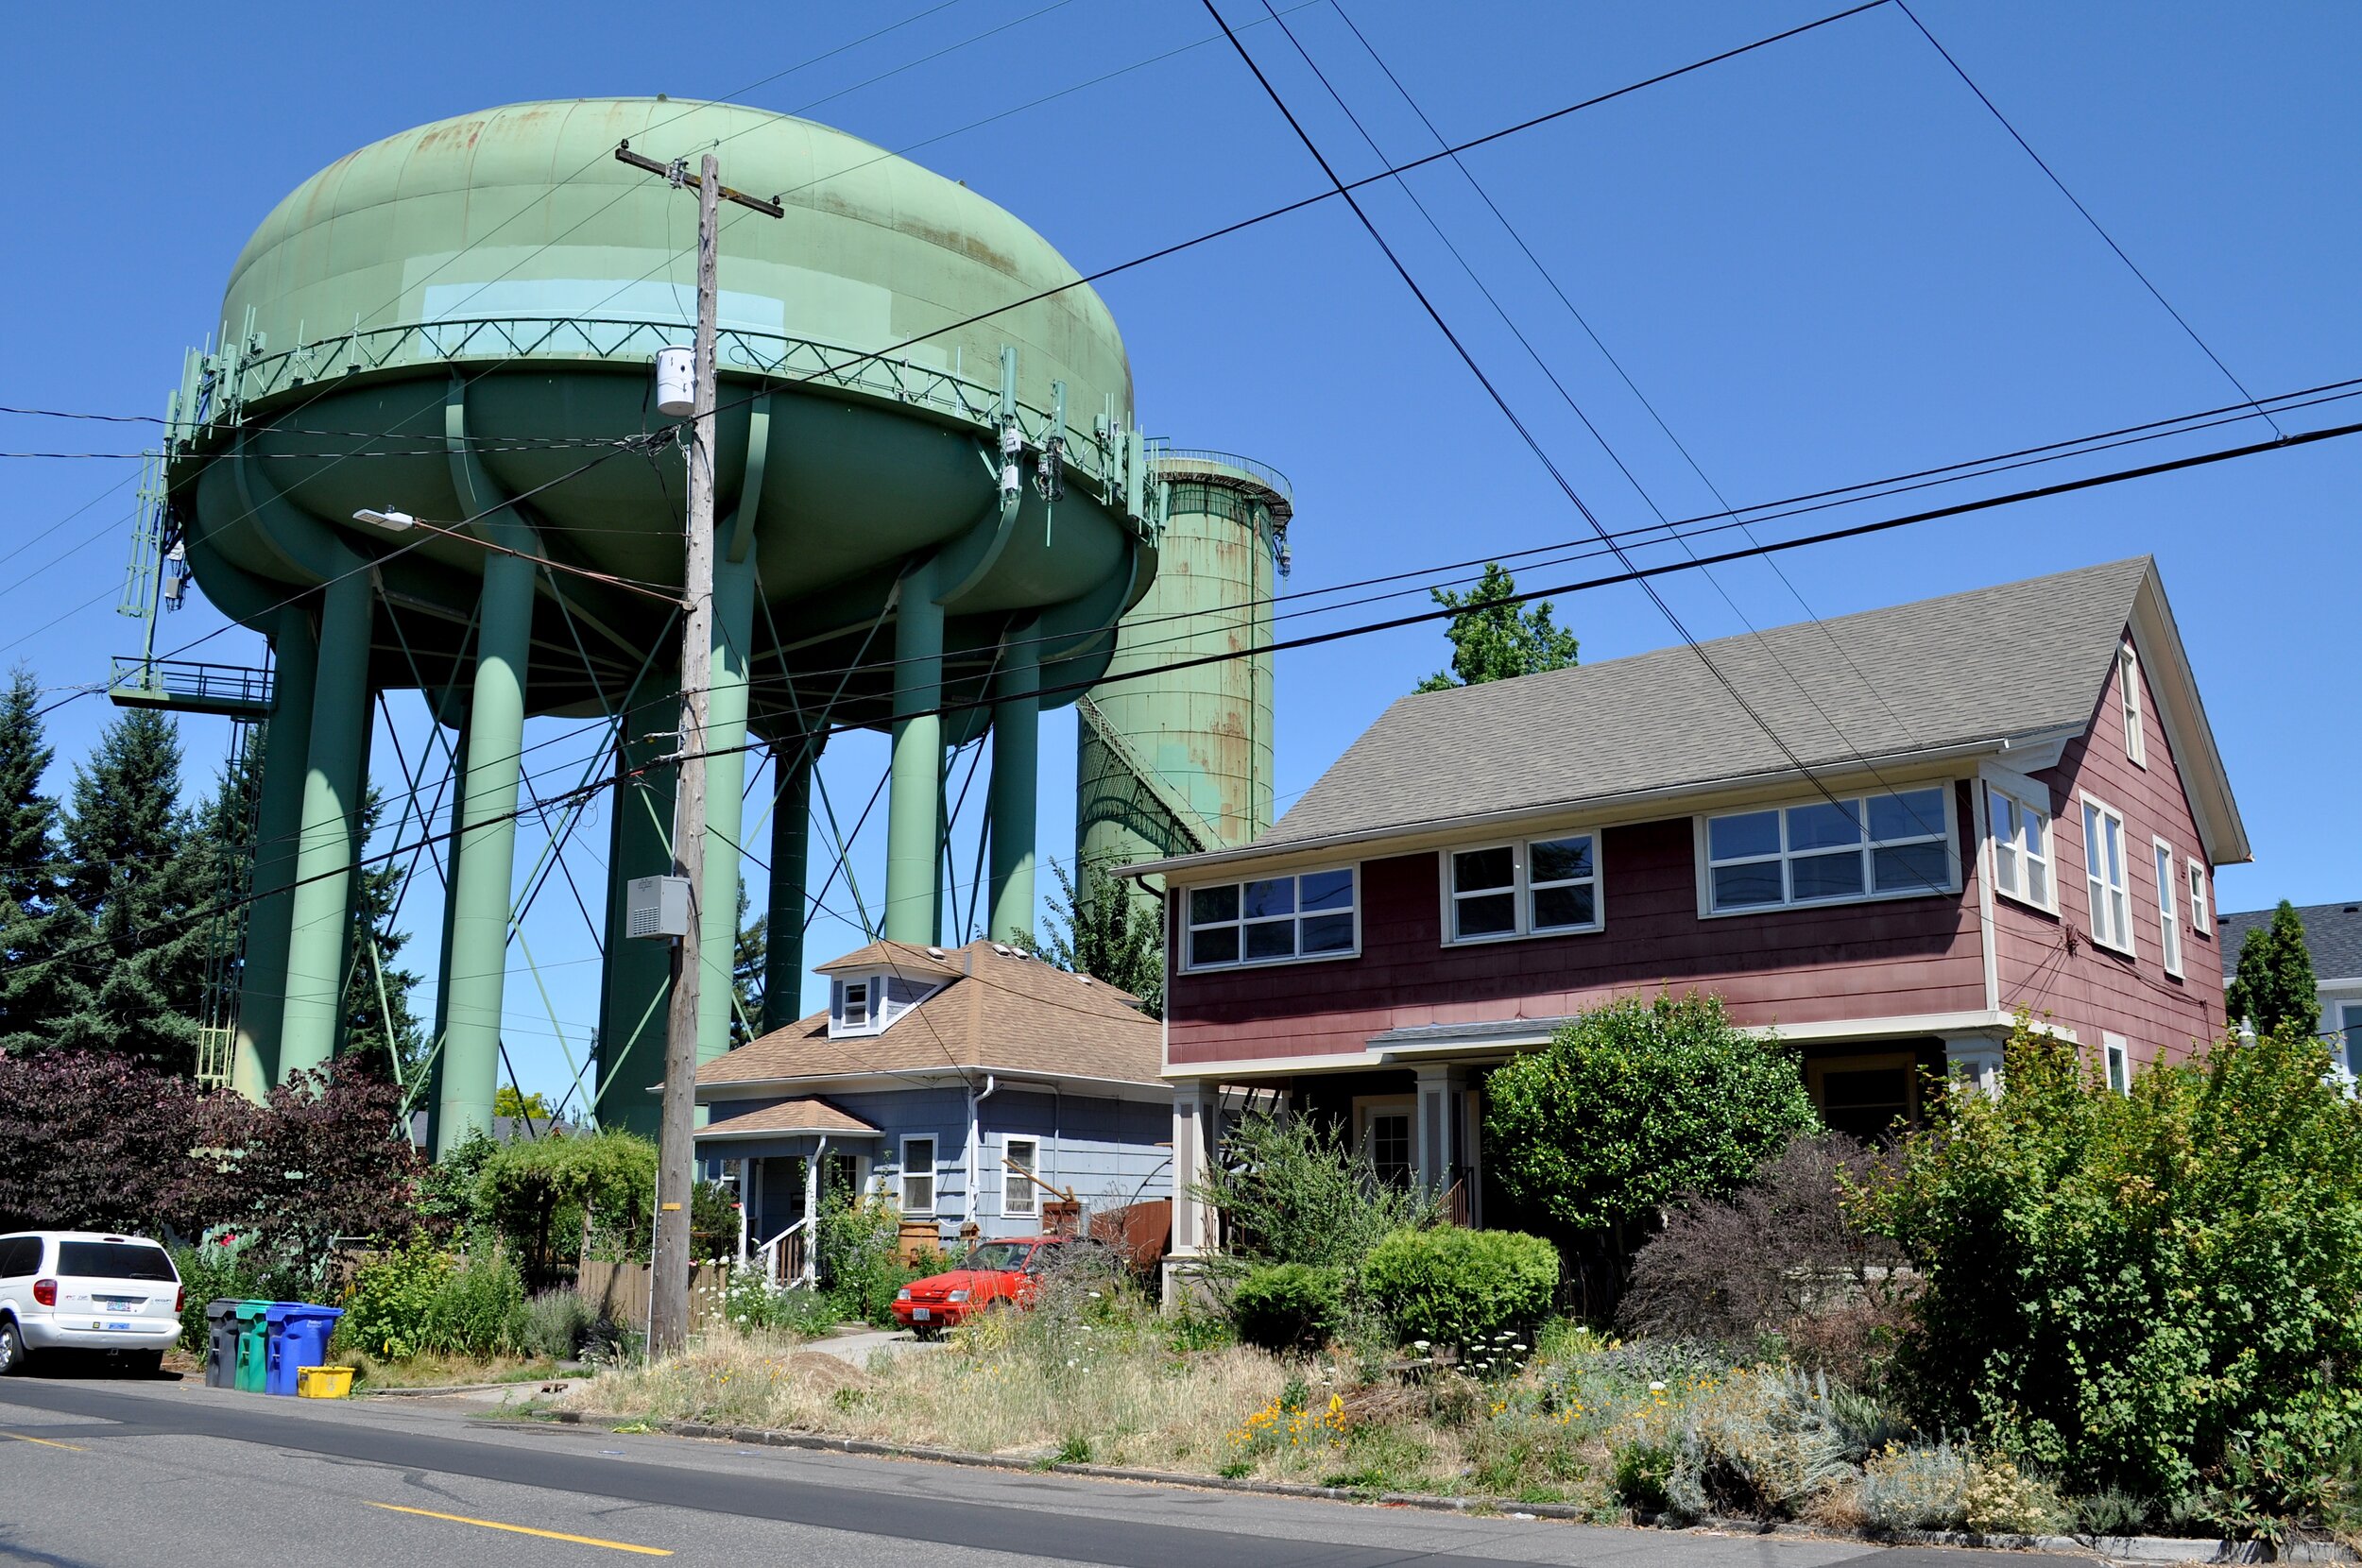 Water Tower Houses - Portland, Oregon (2019)